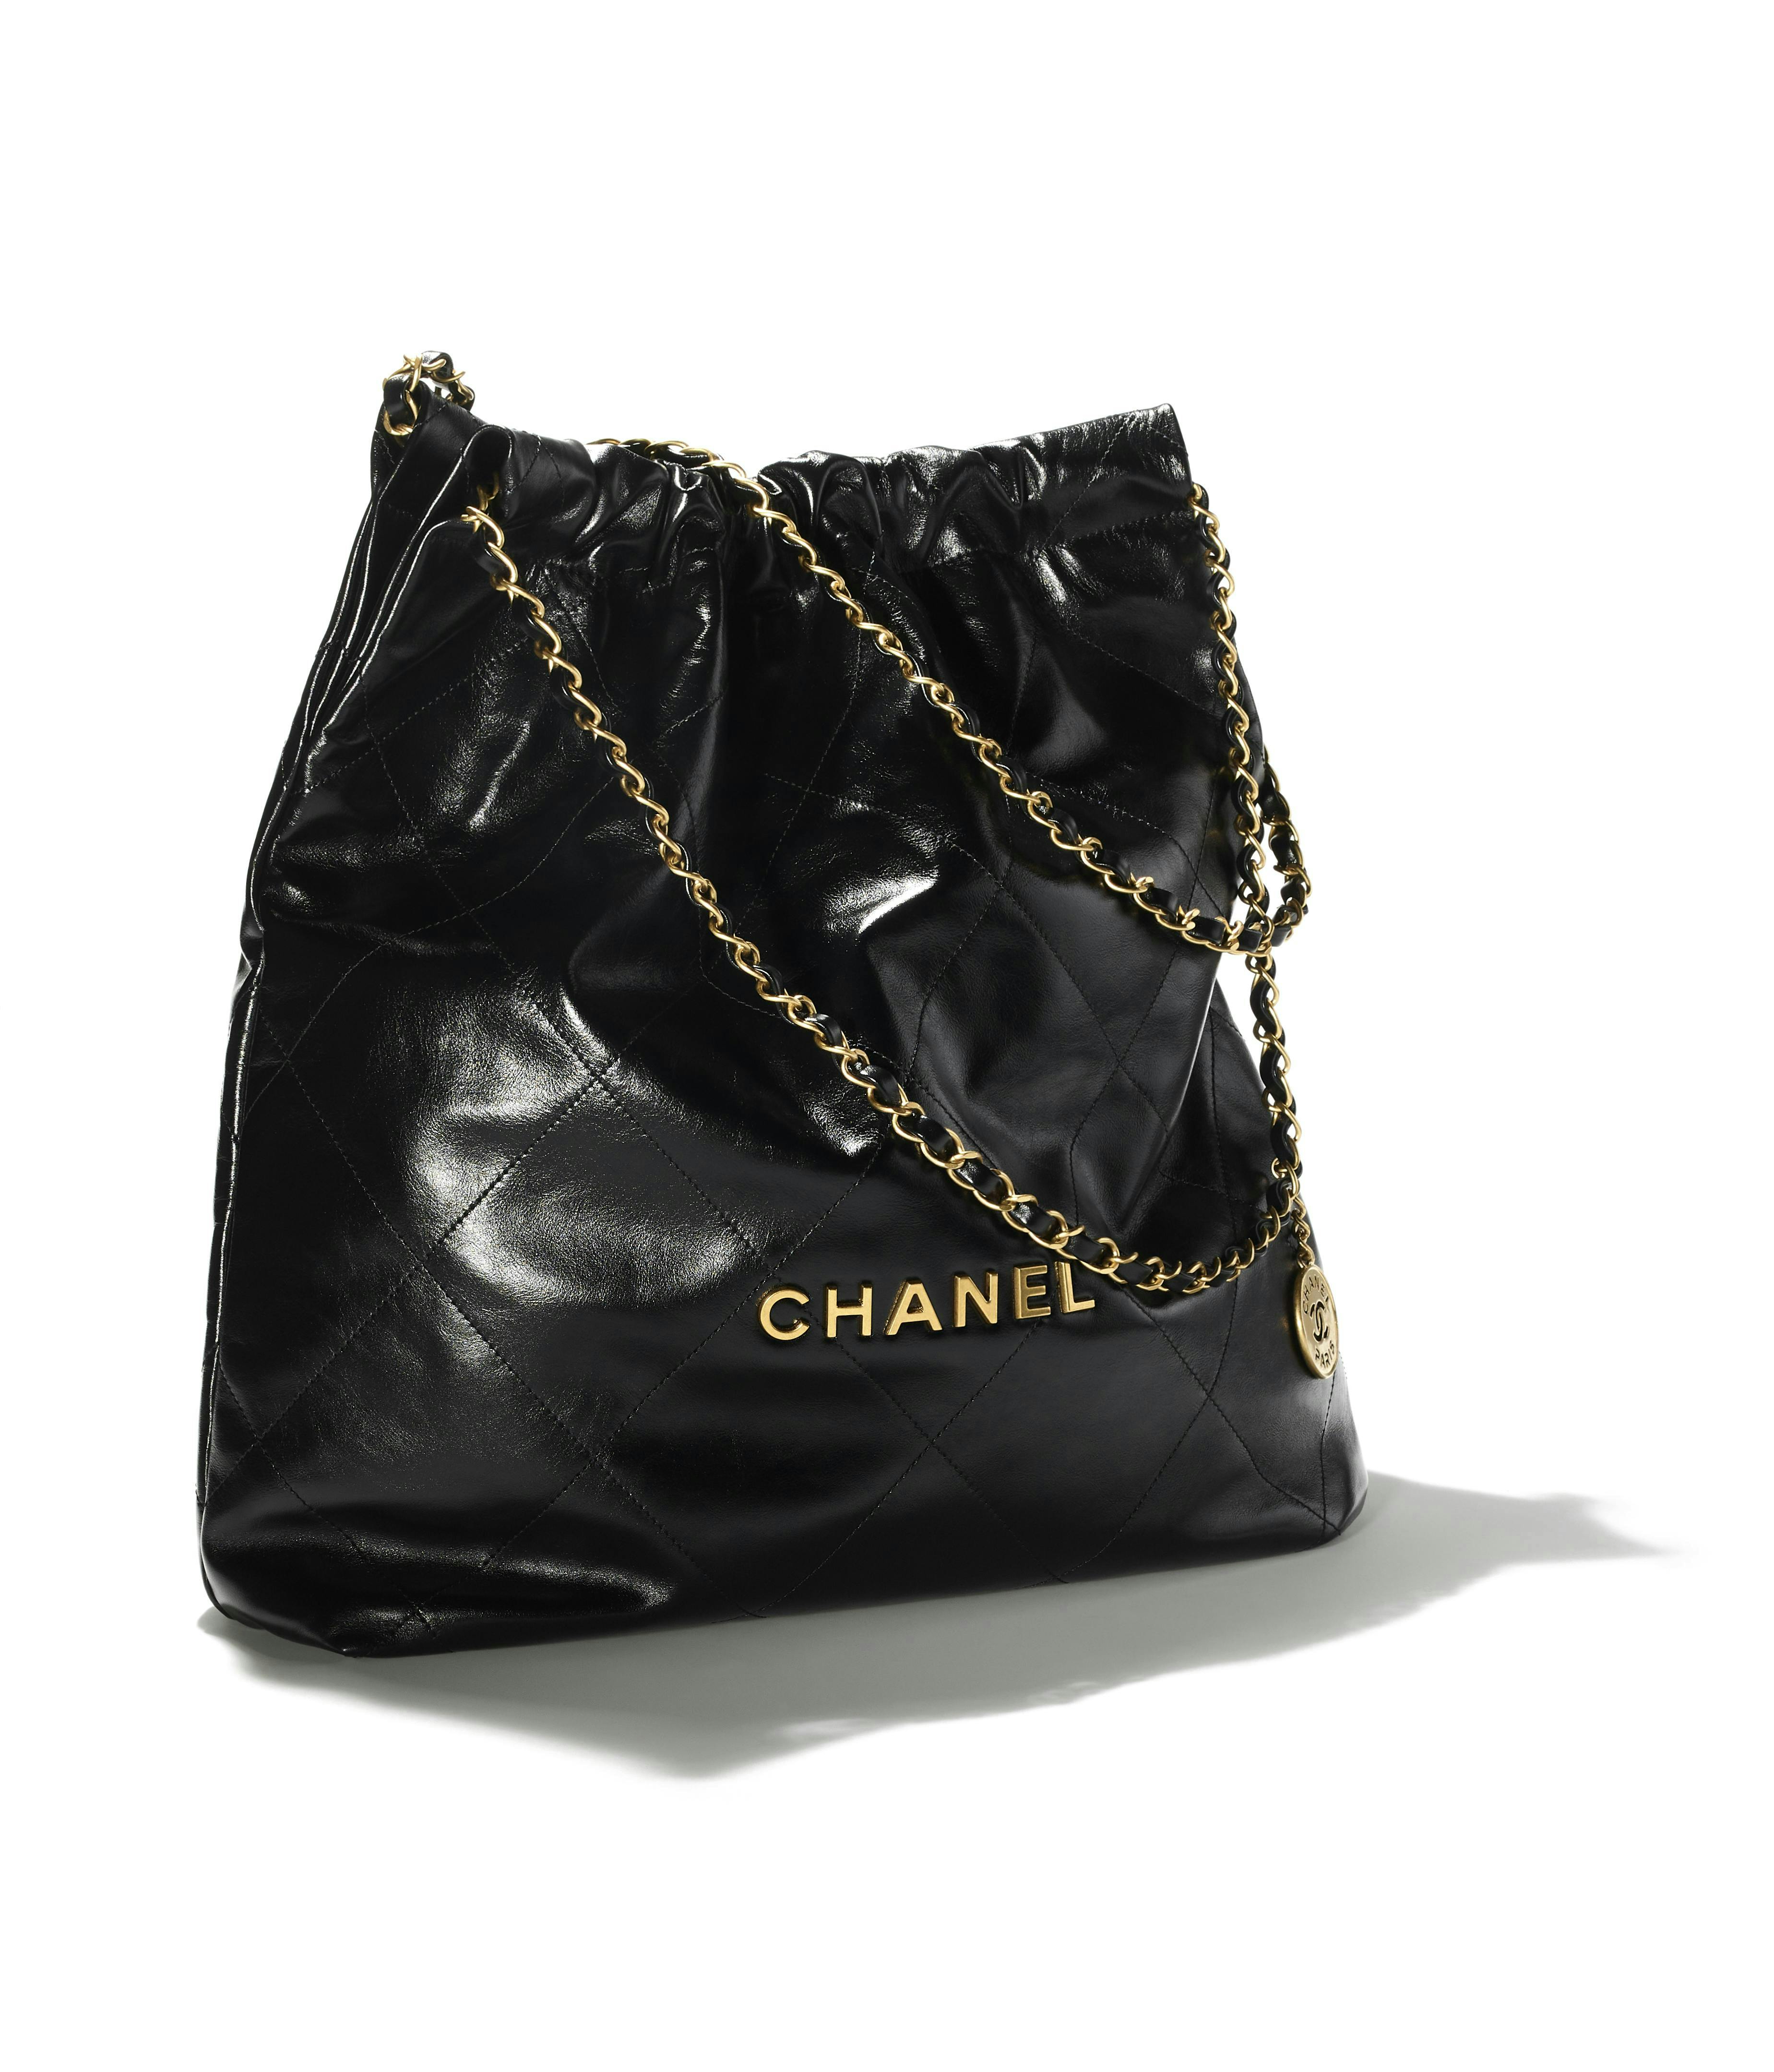 Chanel Presents Chic 22 by Virginie Viard - Chanel 22